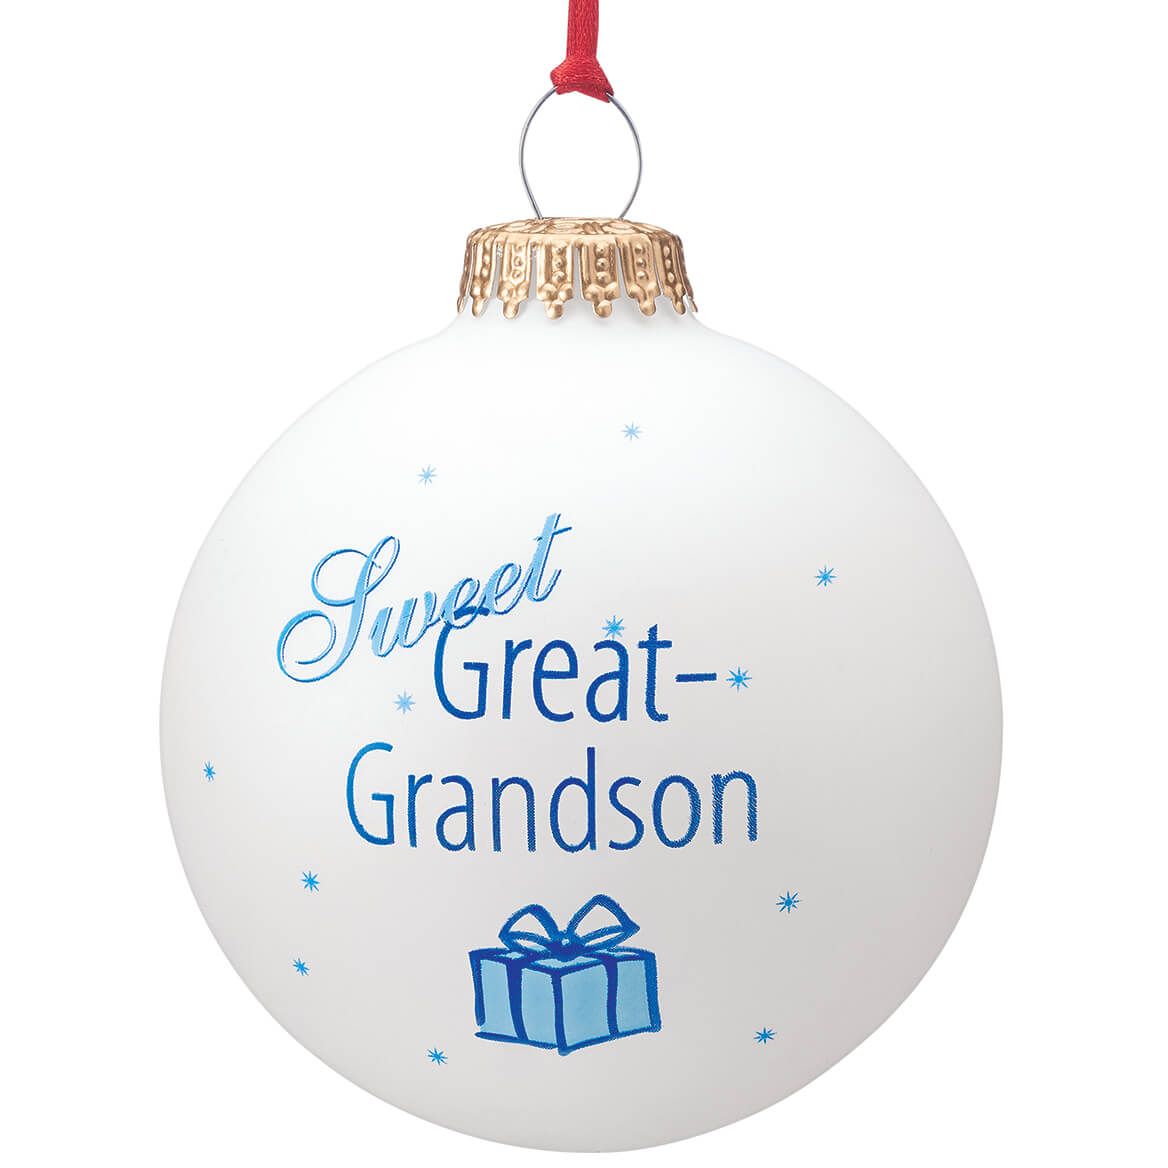 Sweet Great Grandson Ball Ornament + '-' + 343092